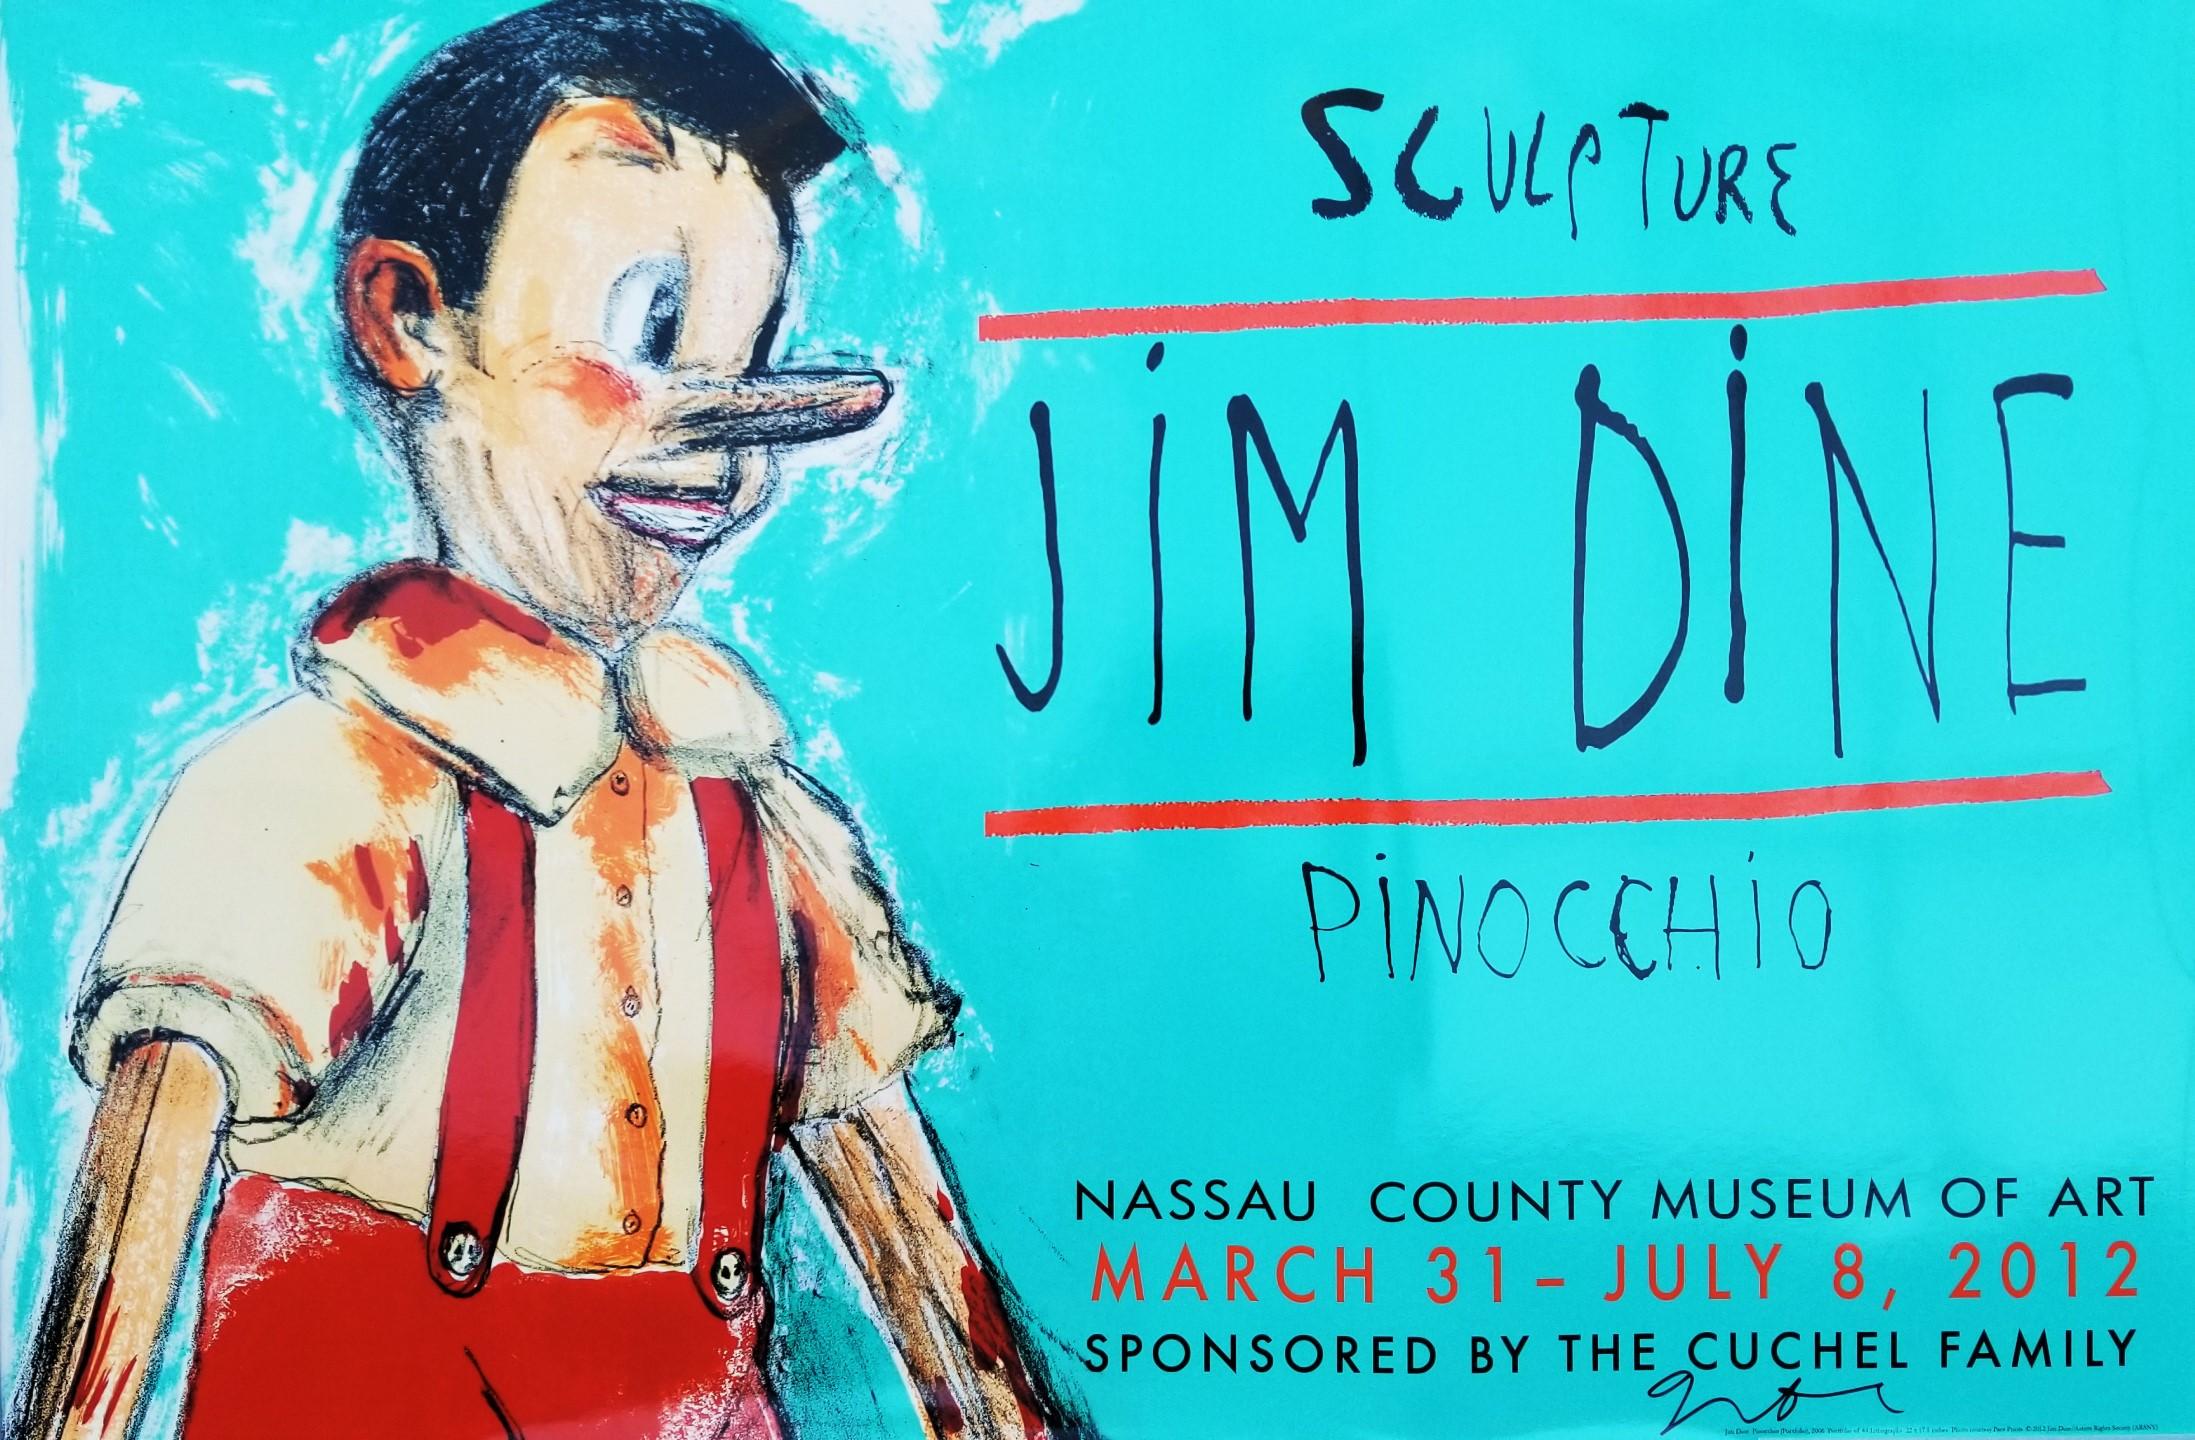 Nassau County Museum of Art (Sculpture/Jim Dine/Pinocchio) Poster (Signed)